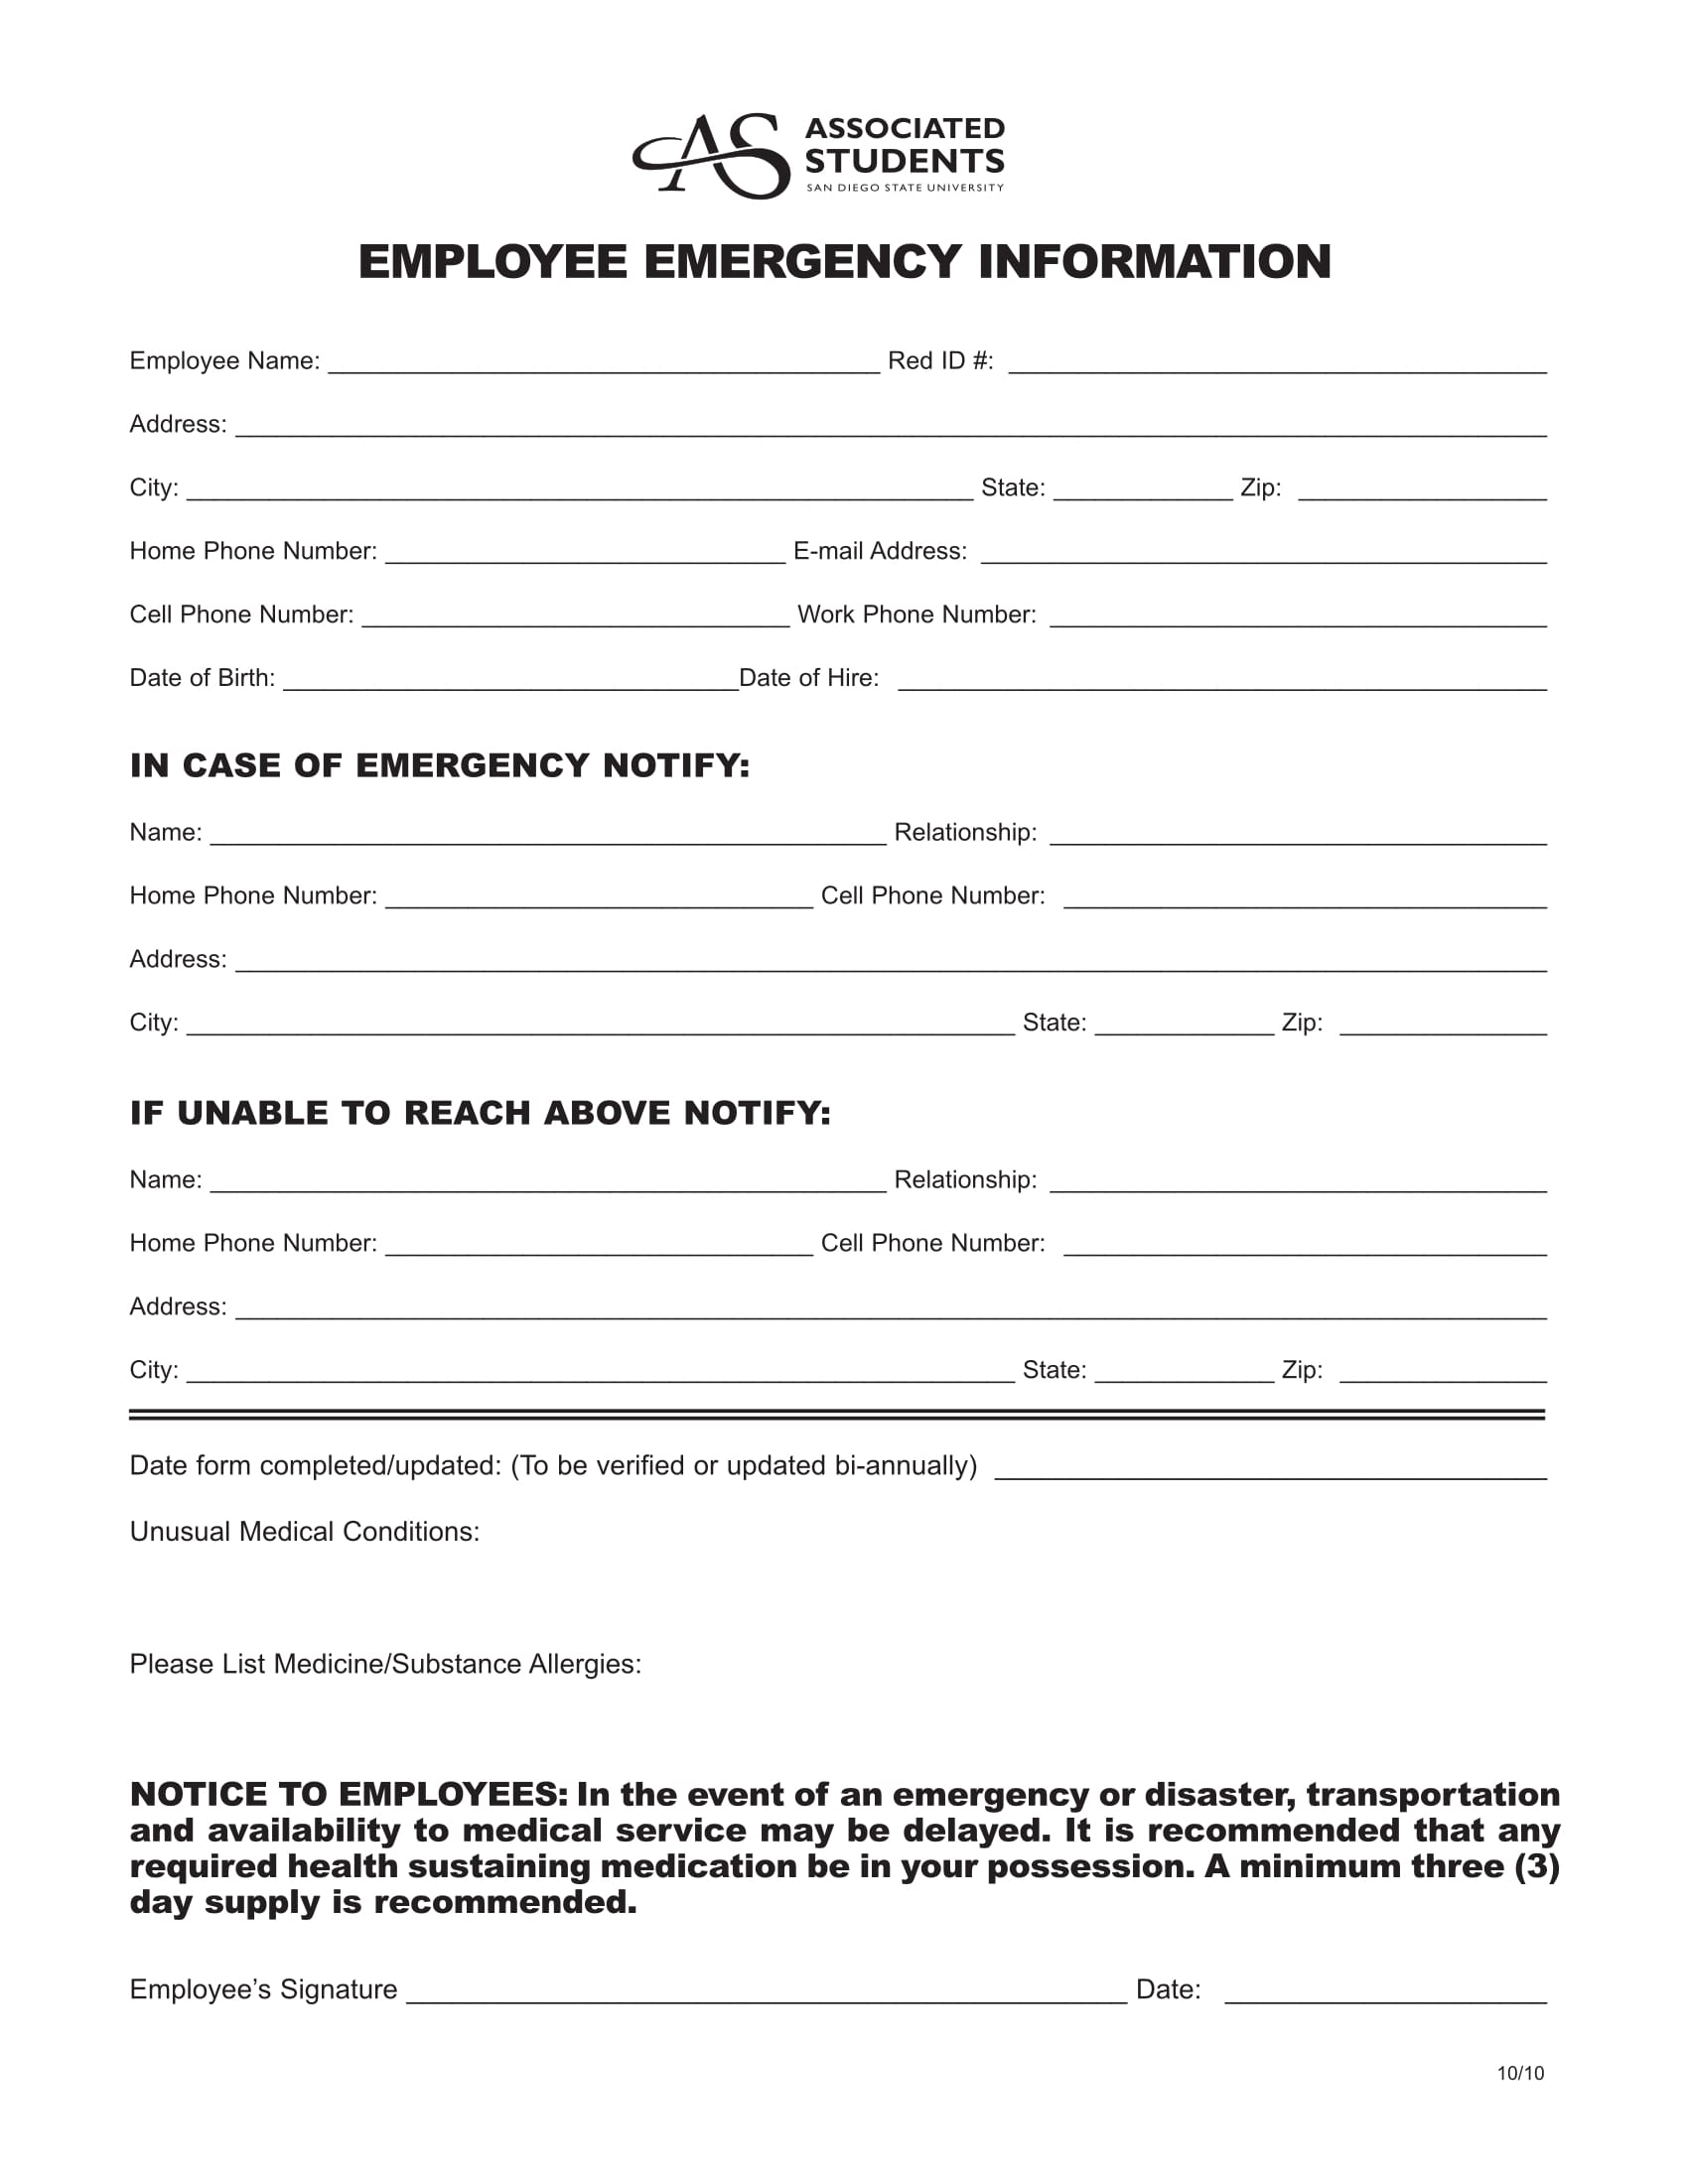 university employee emergency notification form 1